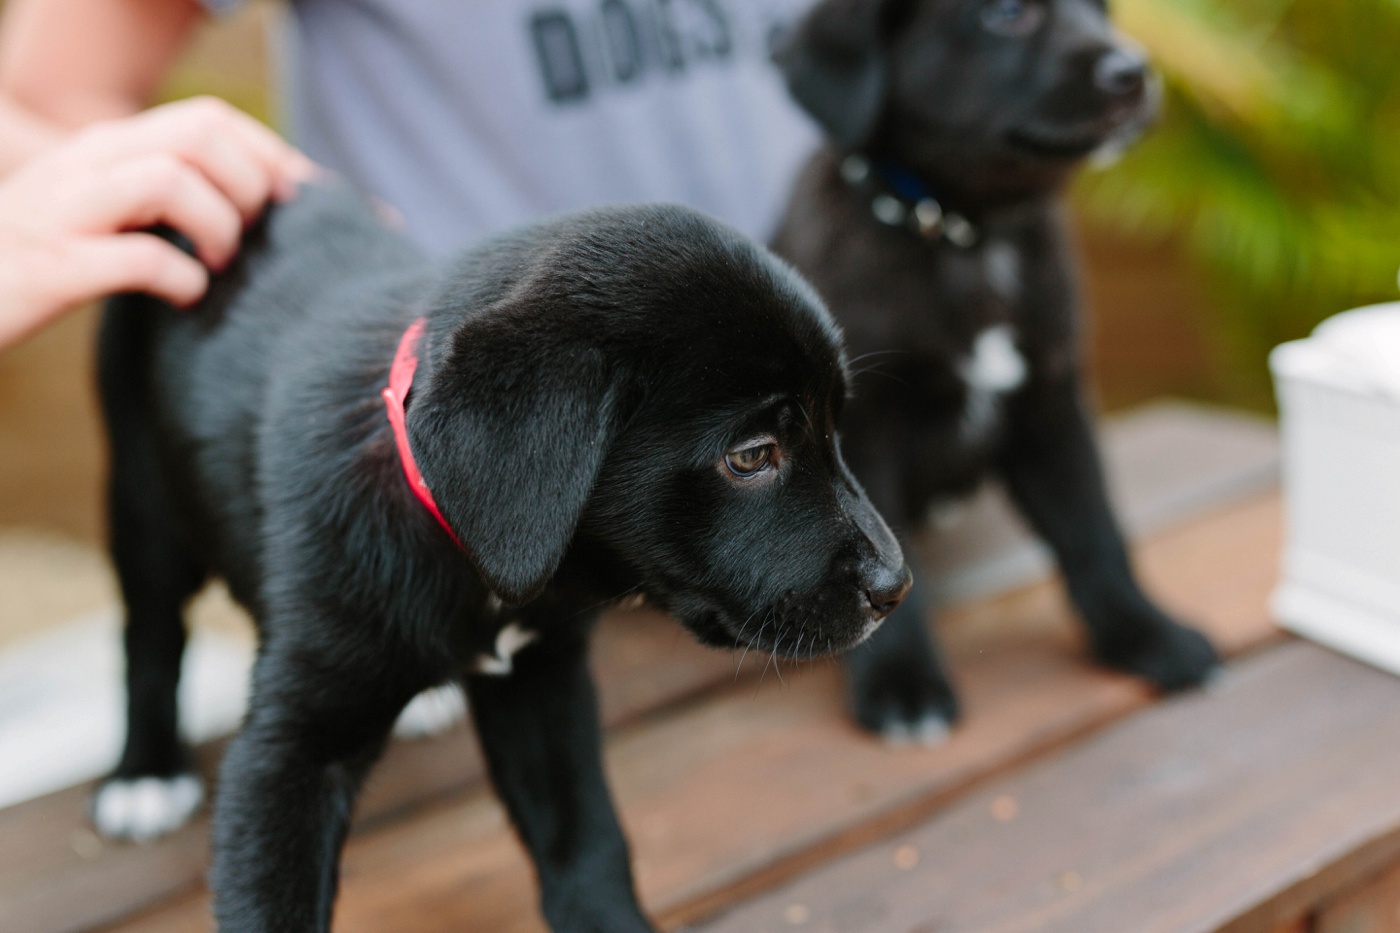 black-lab-puppies